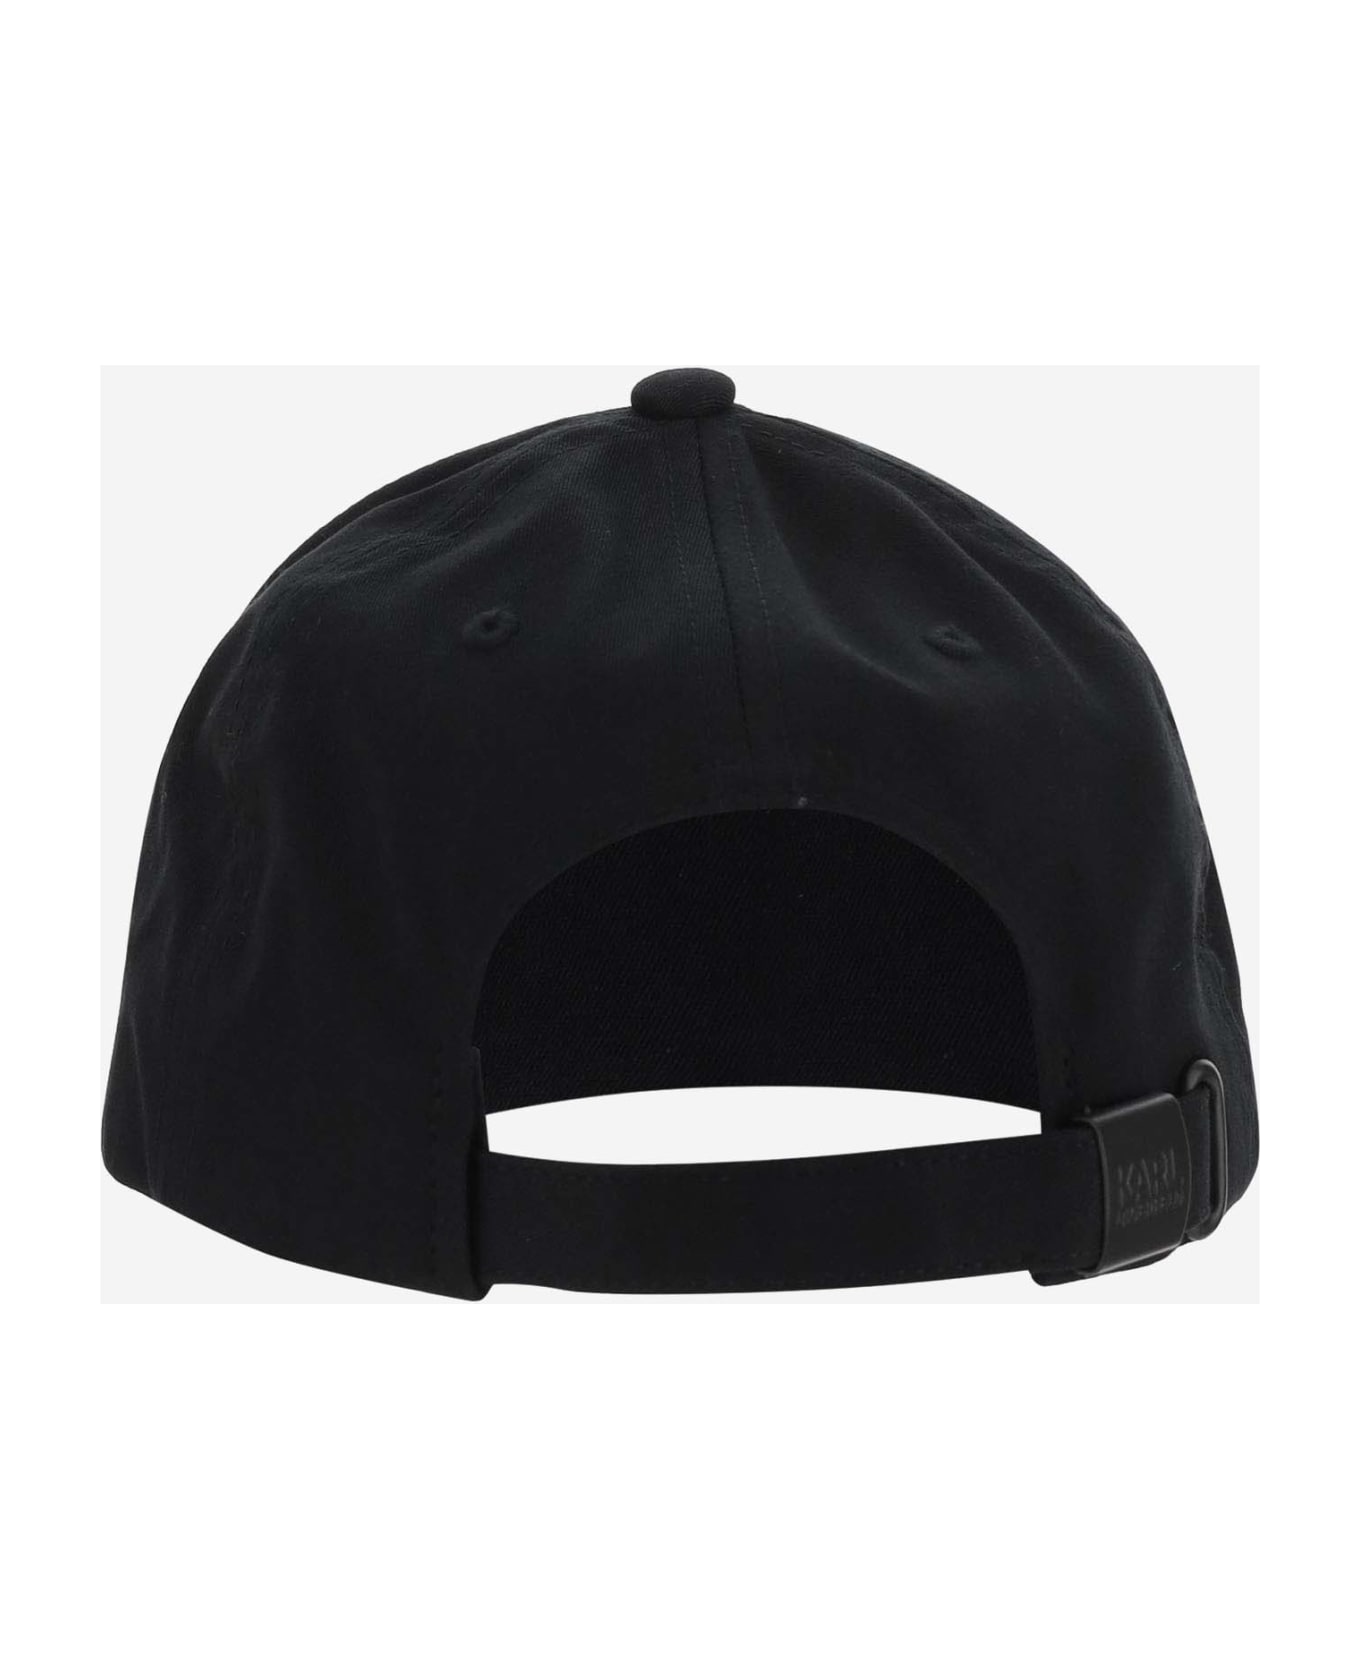 Karl Lagerfeld Cotton Blend Baseball Cap With Logo - Black